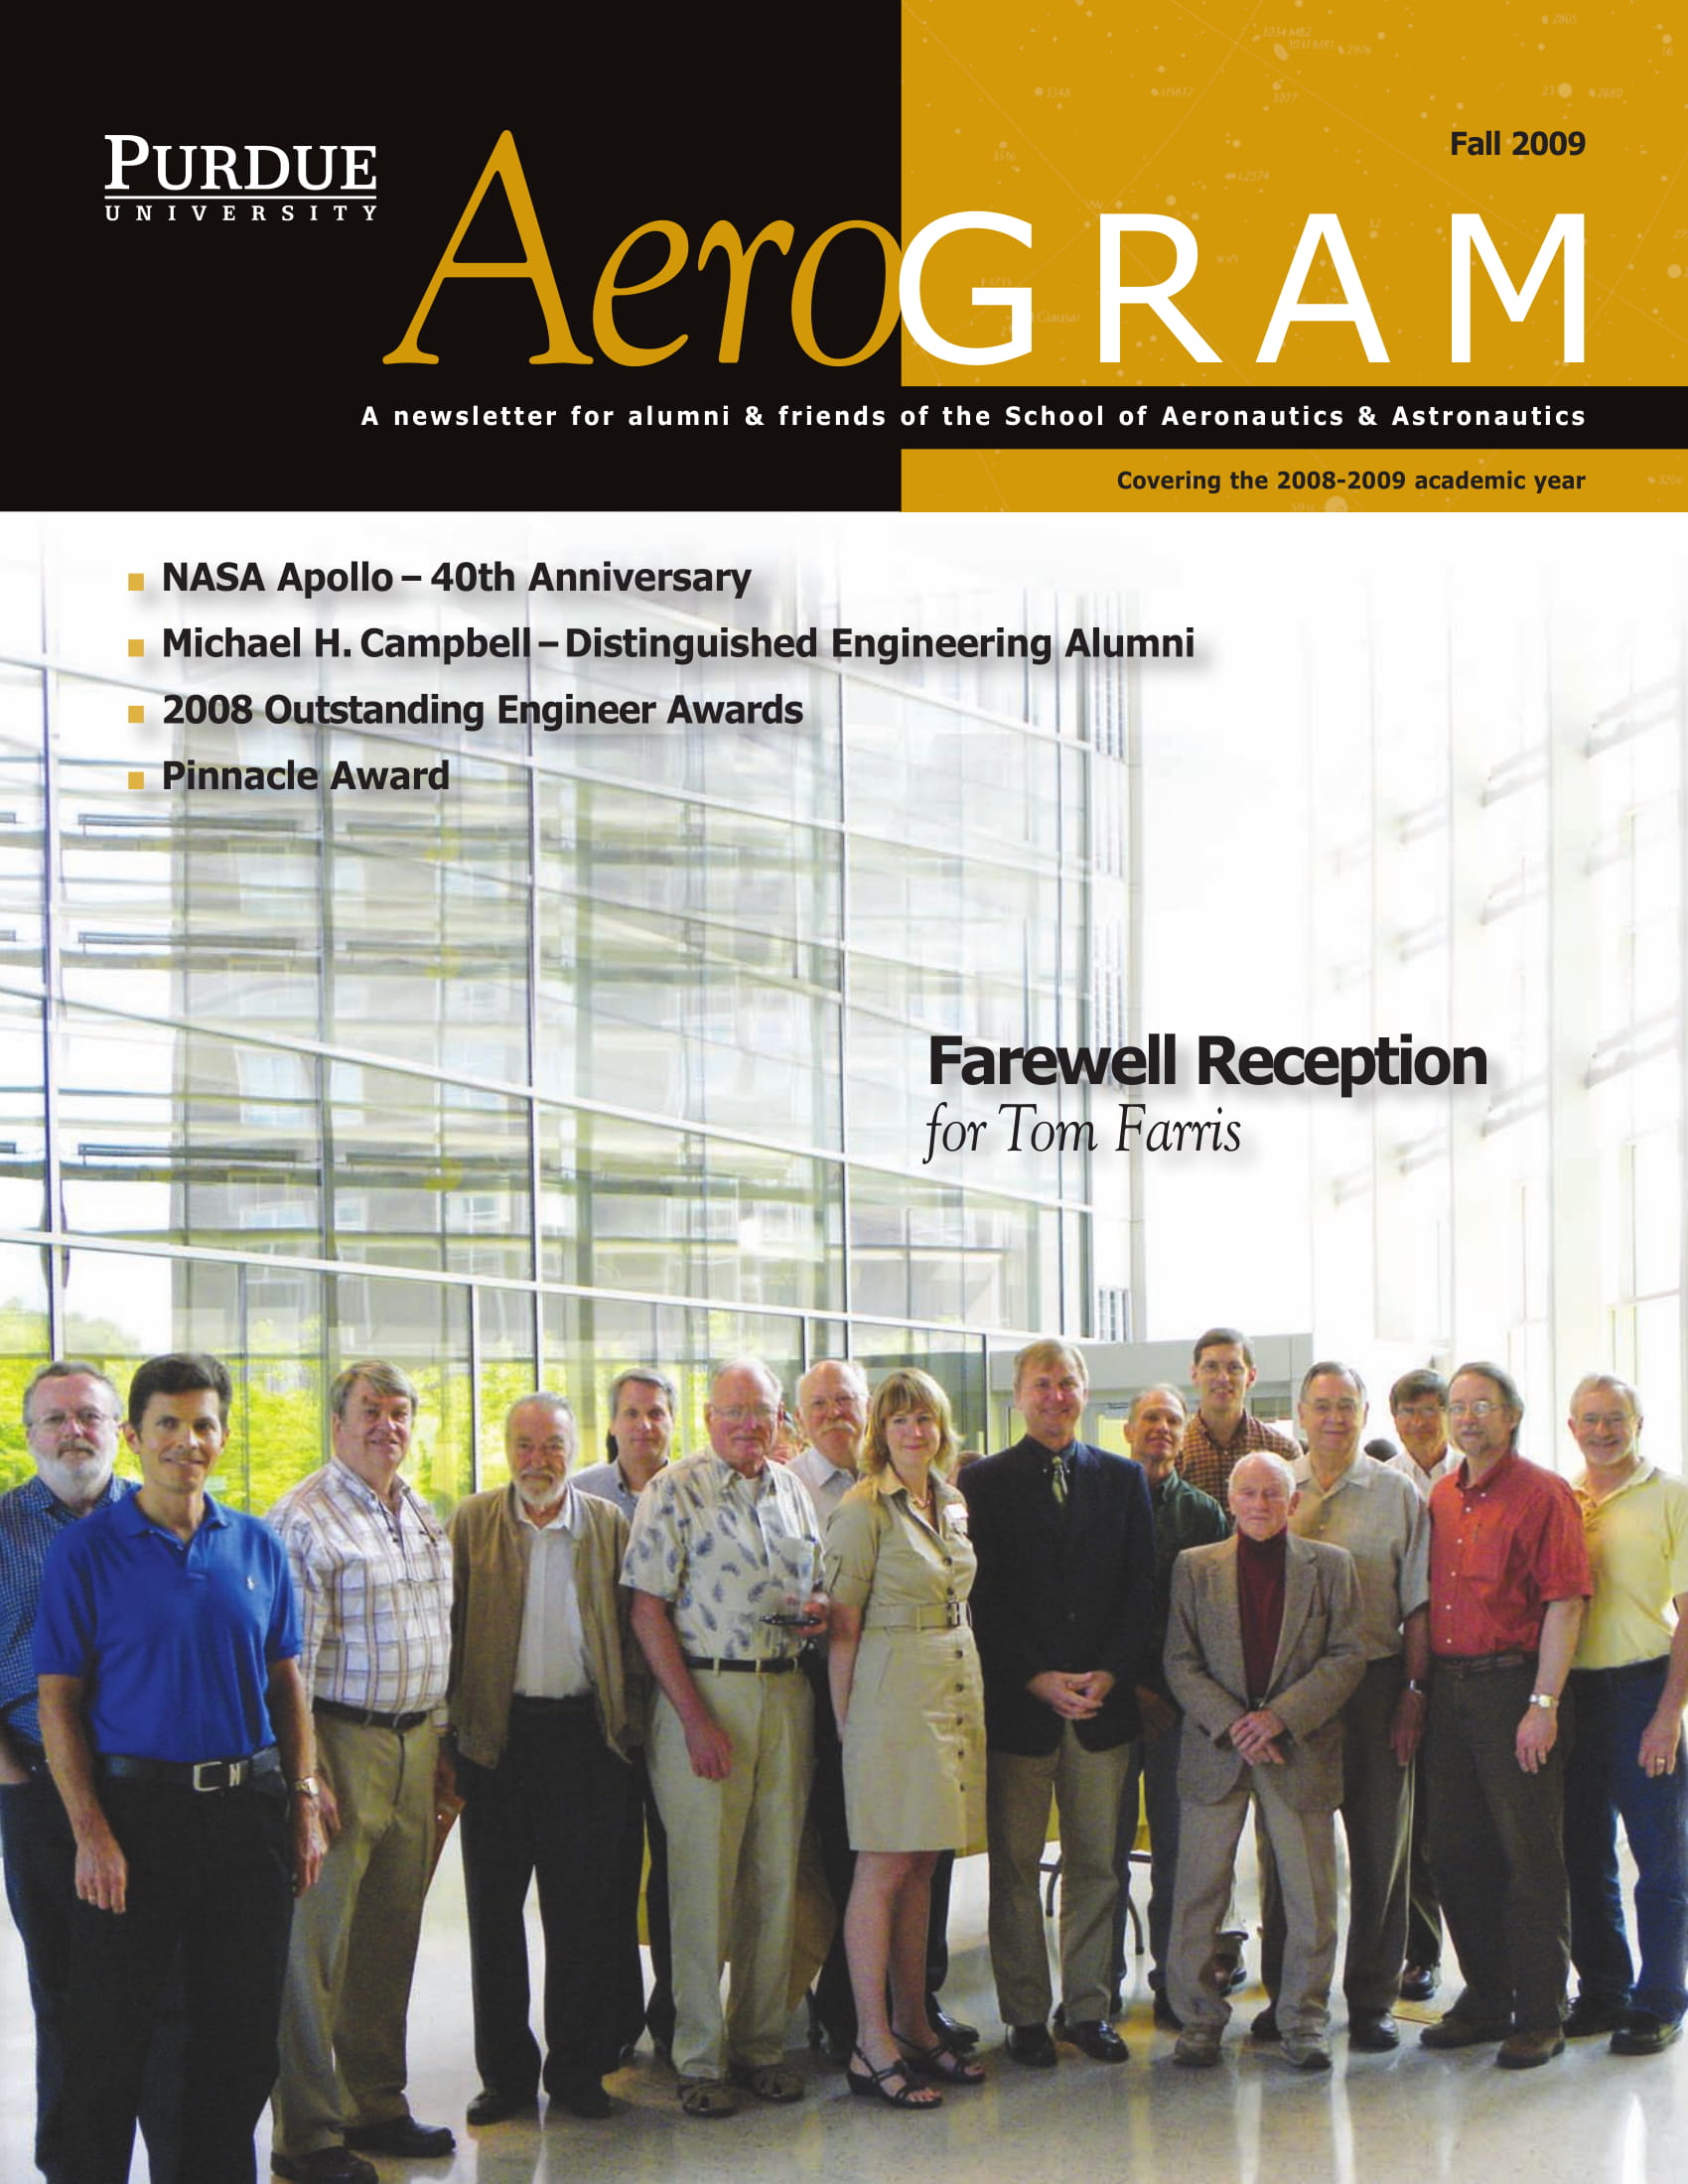 Aerogram magazine, Fall 2009